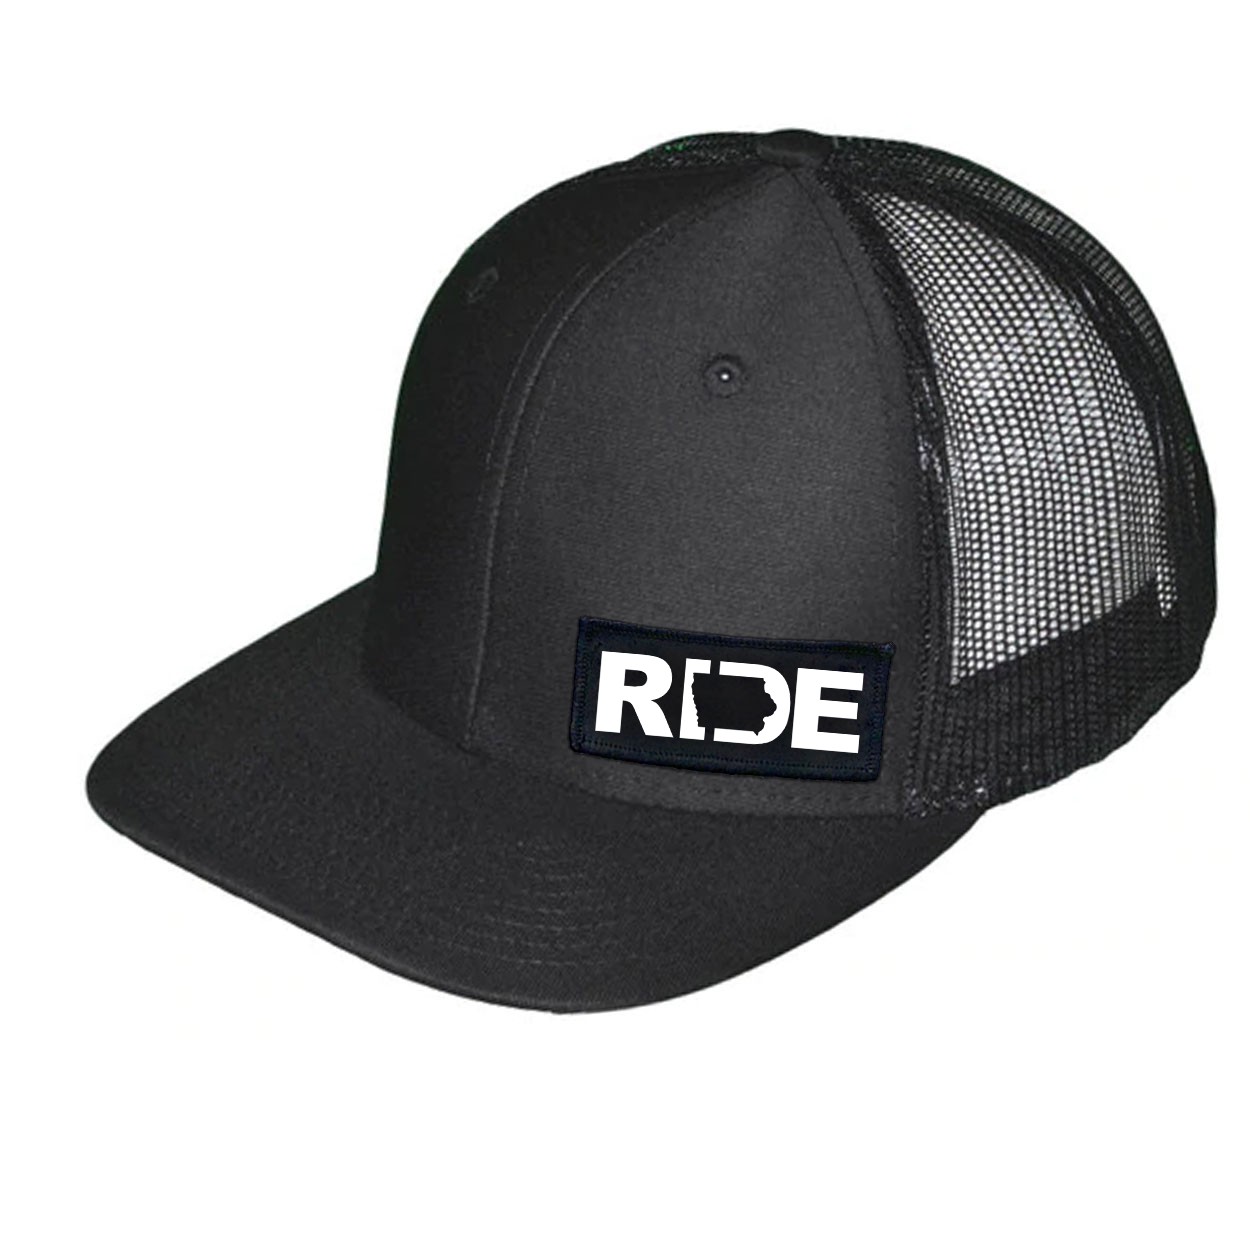 Ride Iowa Night Out Woven Patch Snapback Trucker Hat Black (White Logo)